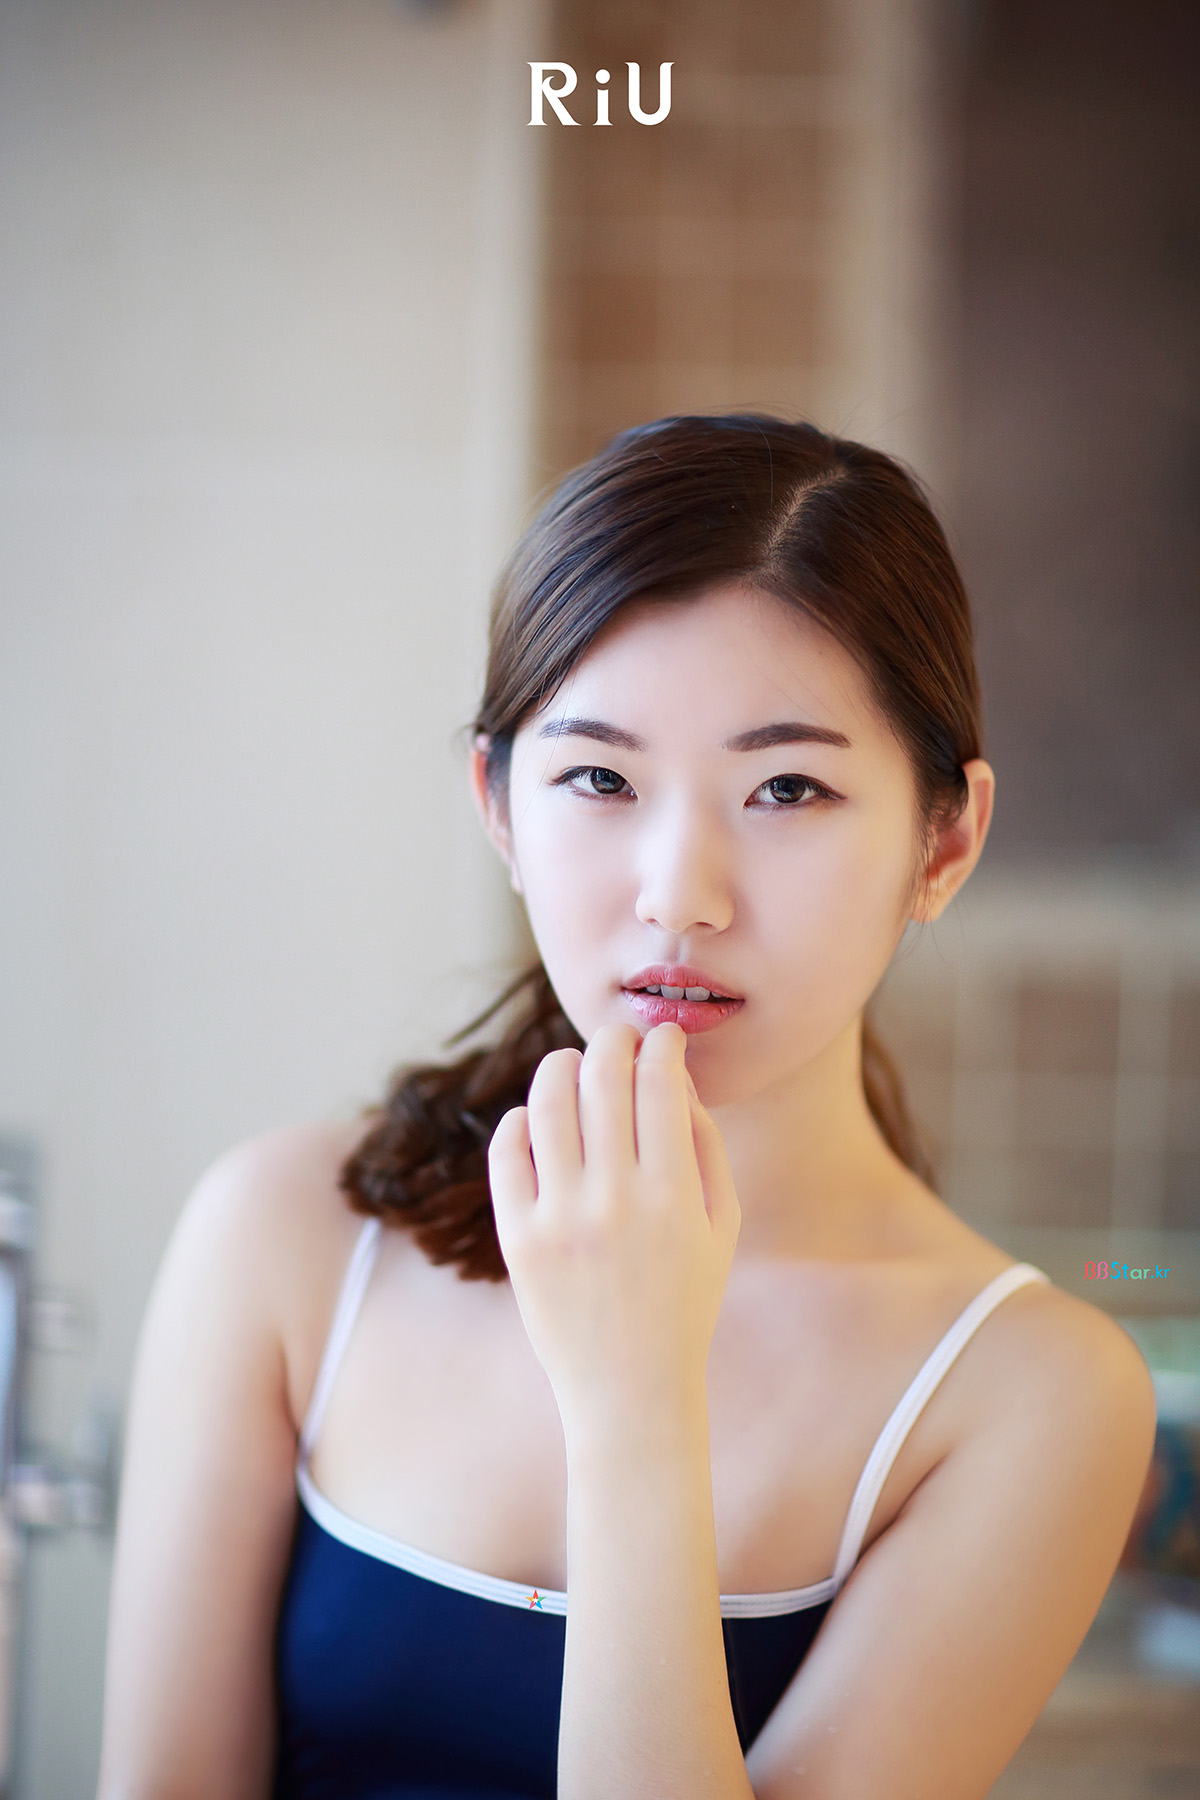 star Japan Riu 4 清純美女 かわいい韓国モデル セクシ水着 浴槽